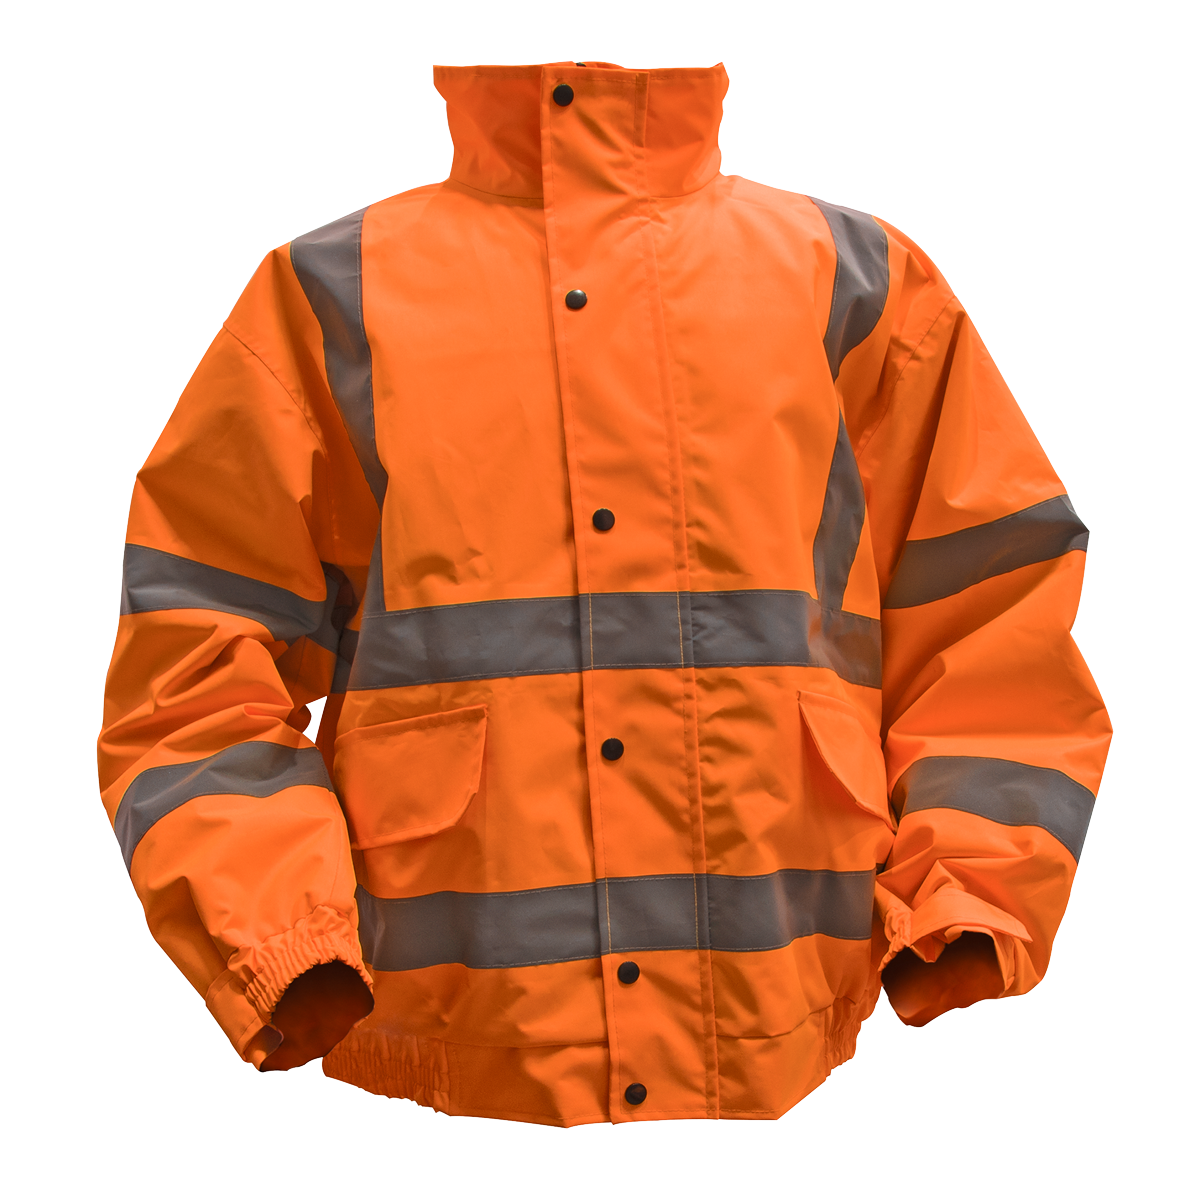 Sealey Hi-Vis Orange Jacket with Quilted Lining & Elasticated Waist - Large 802LO